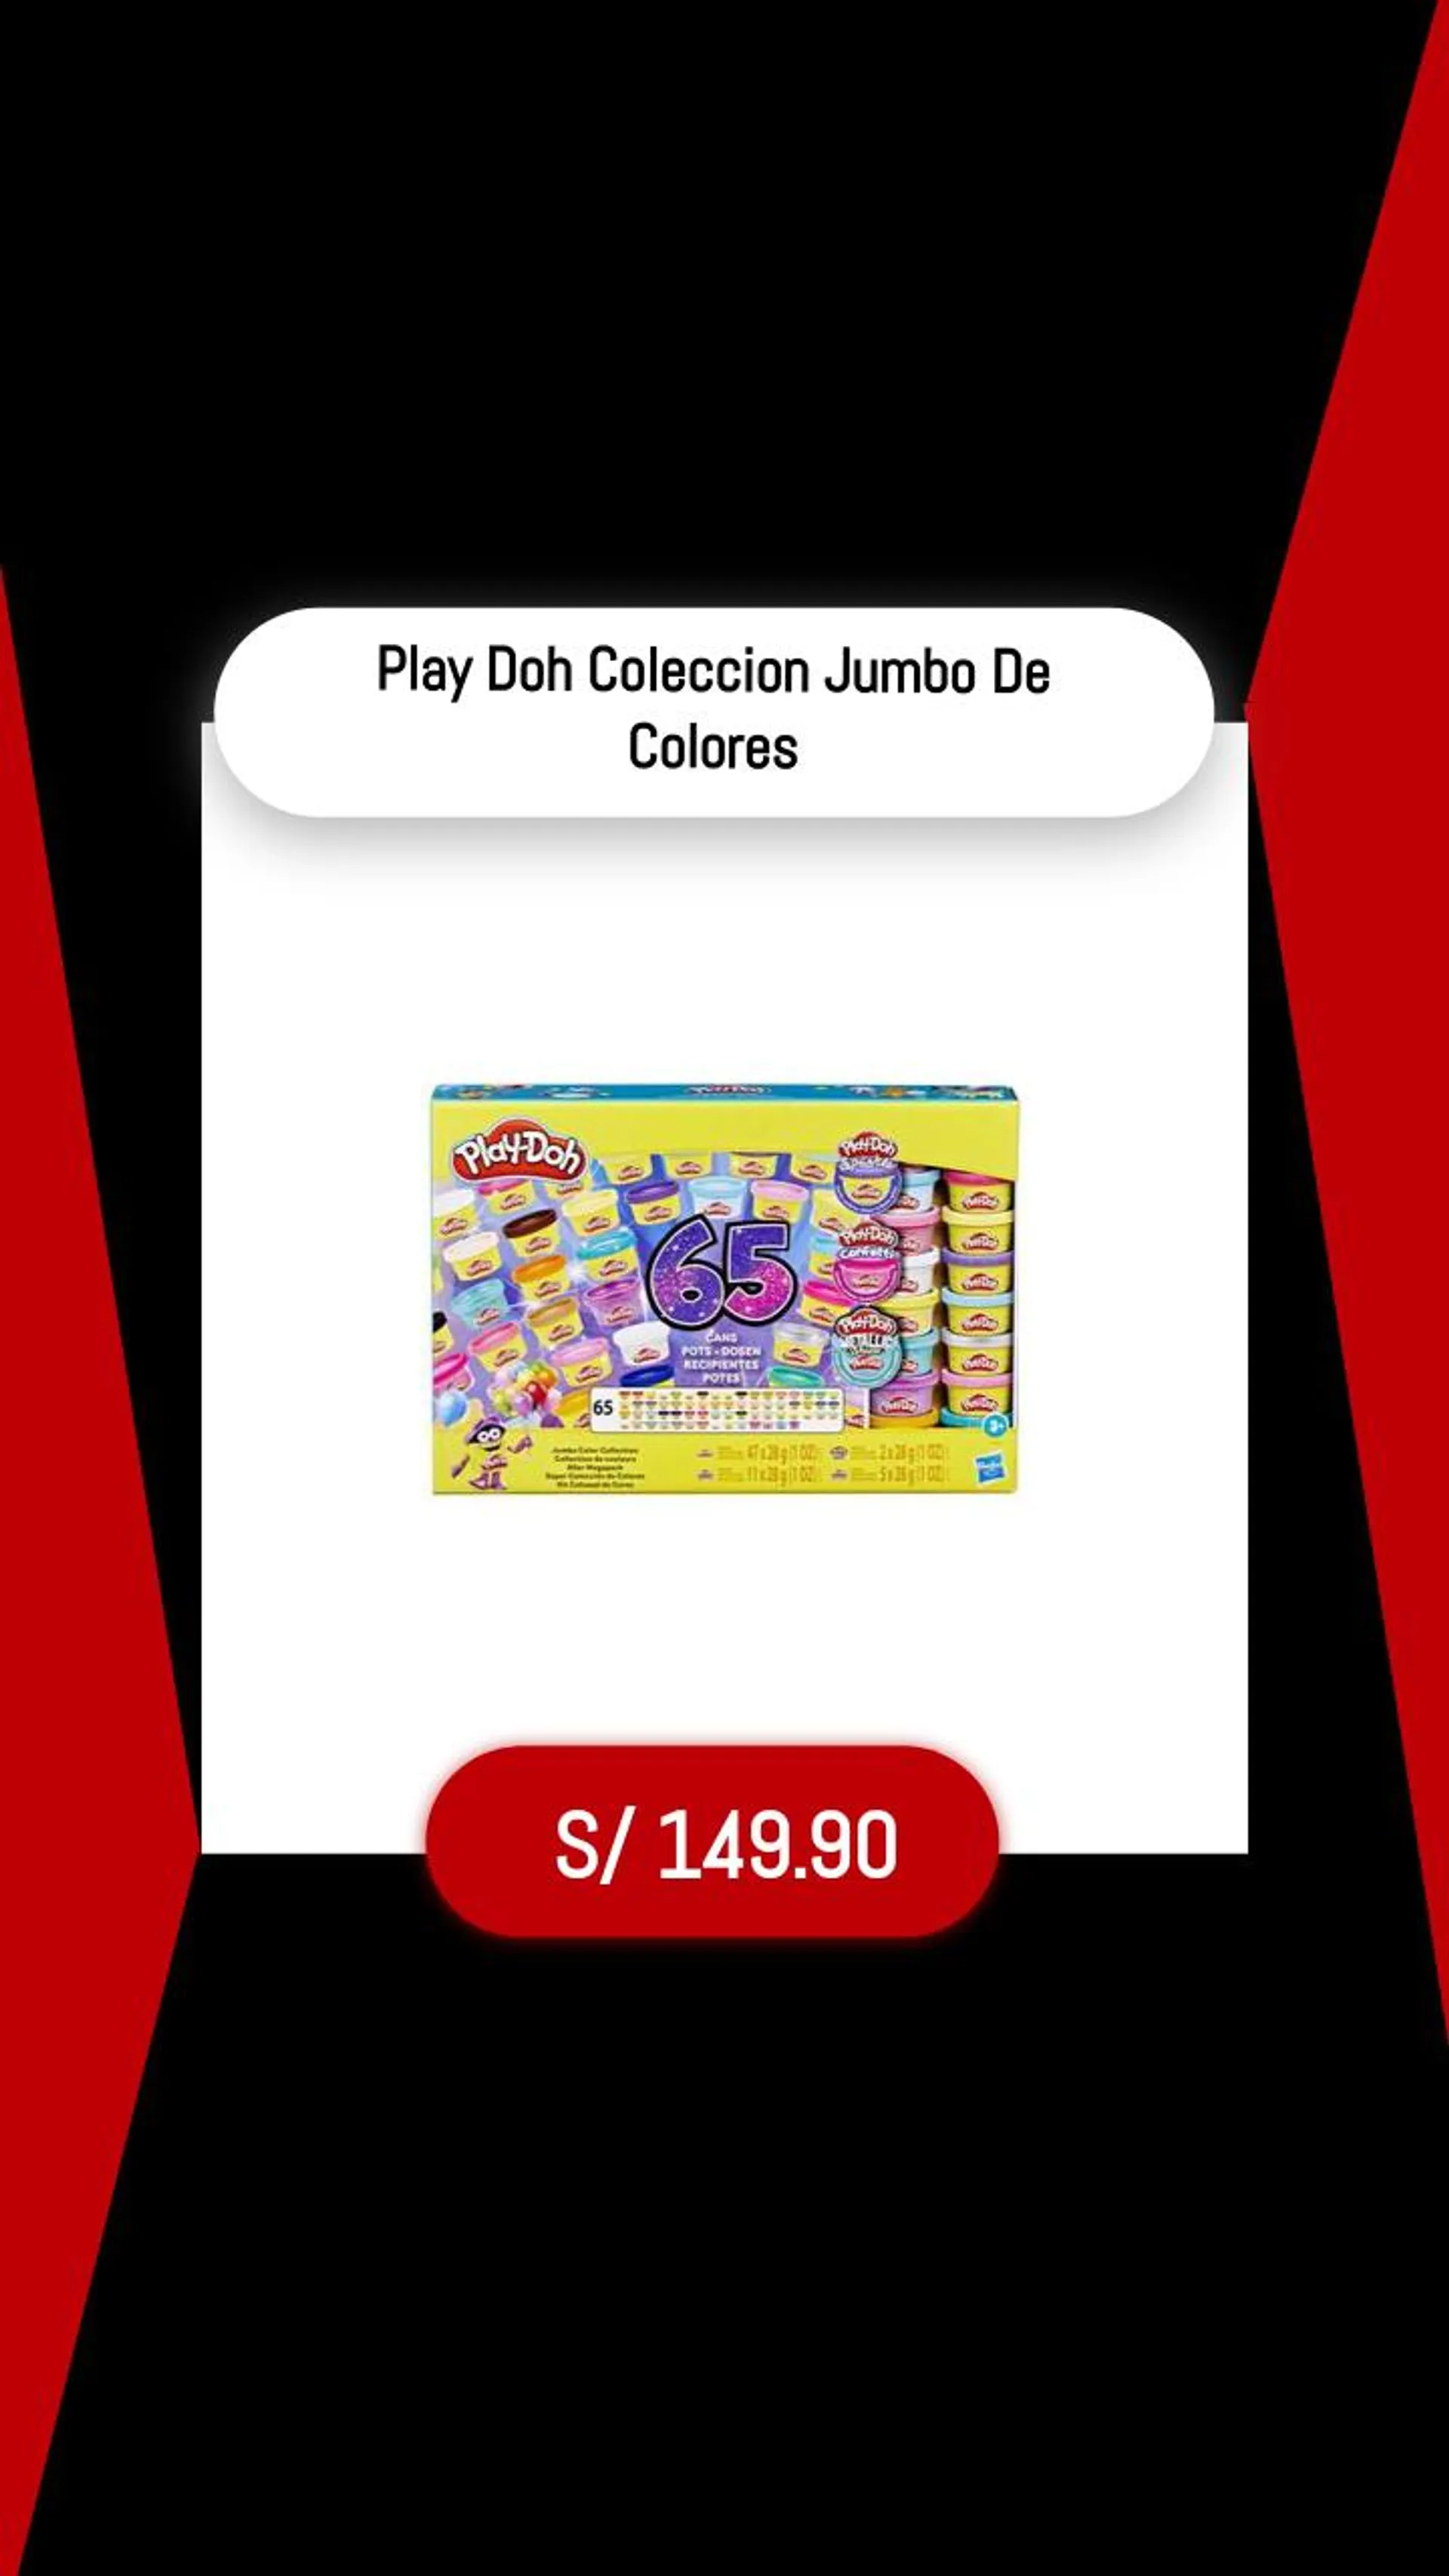 Play Doh Coleccion Jumbo De Colores